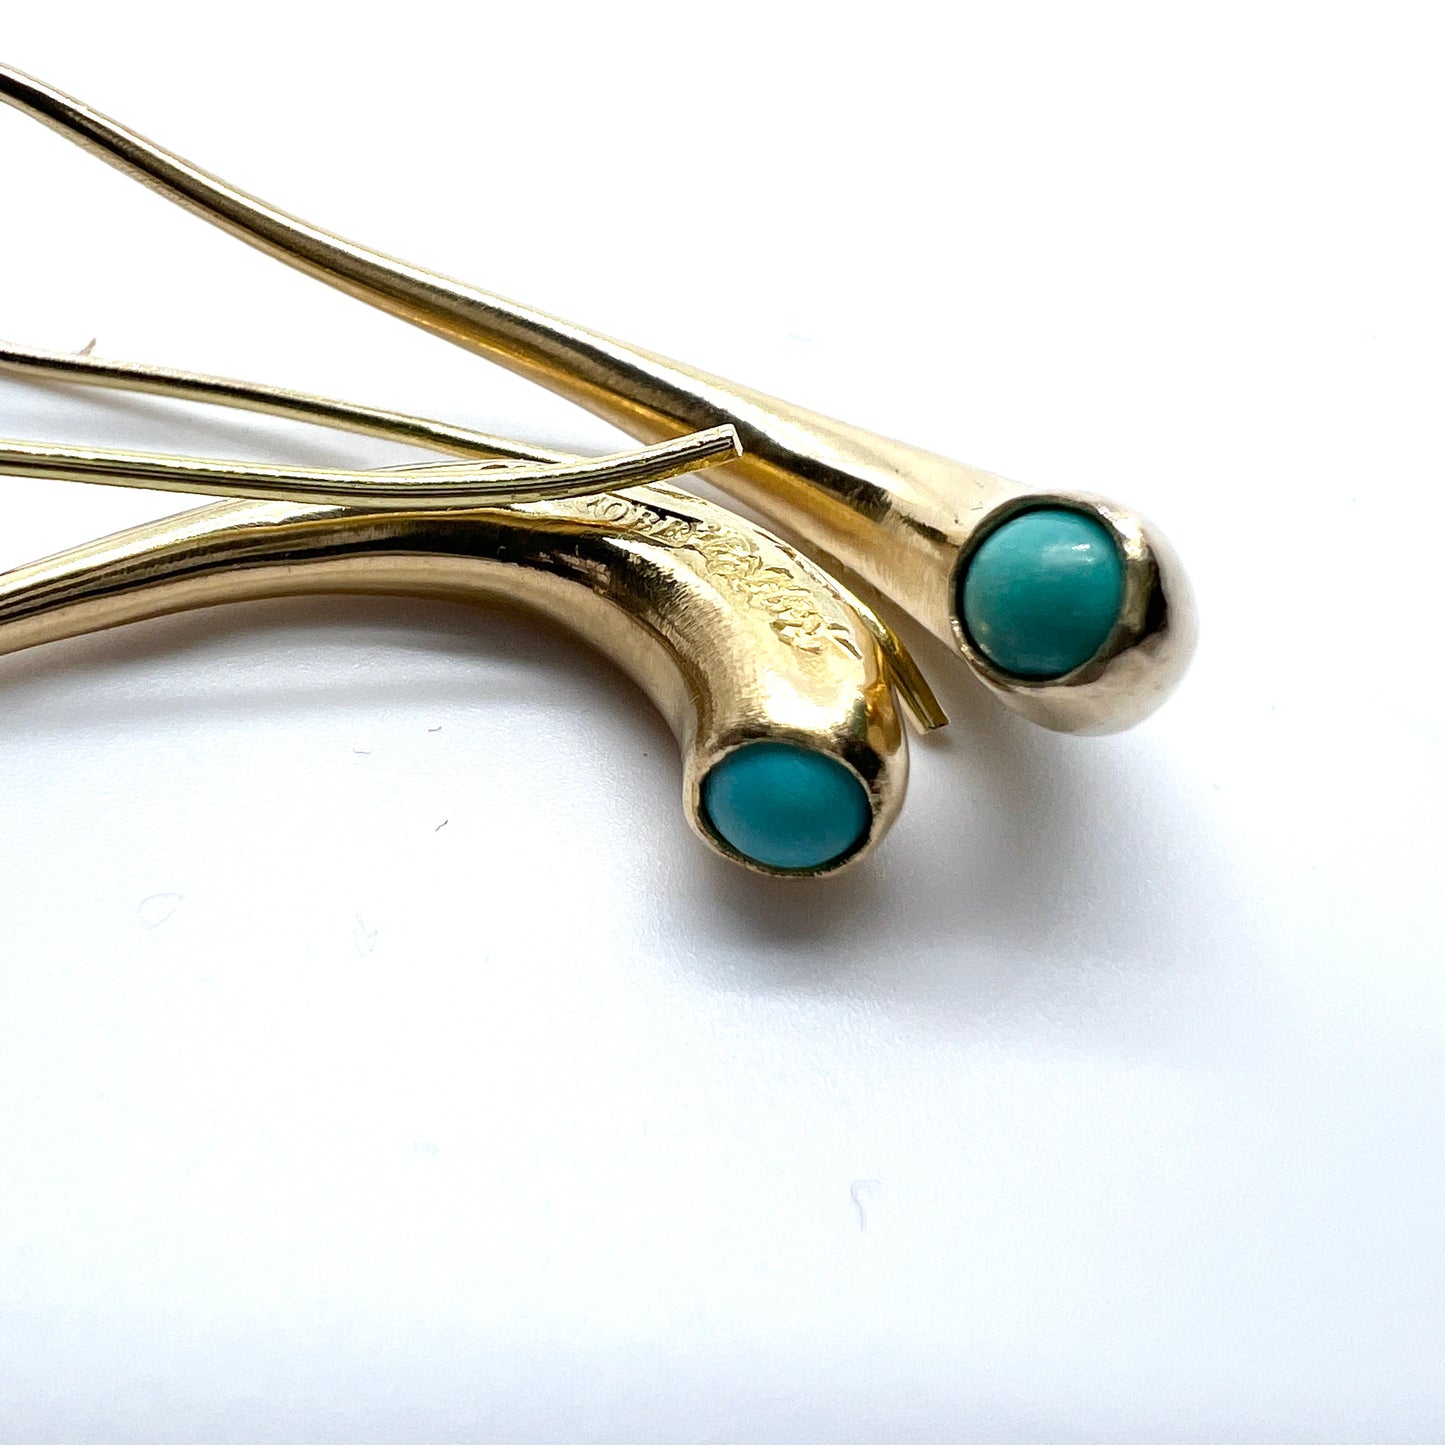 Robbert, Sweden 1965. Unique Vintage Modernist 18k Gold Turquoise Earrings. Signed